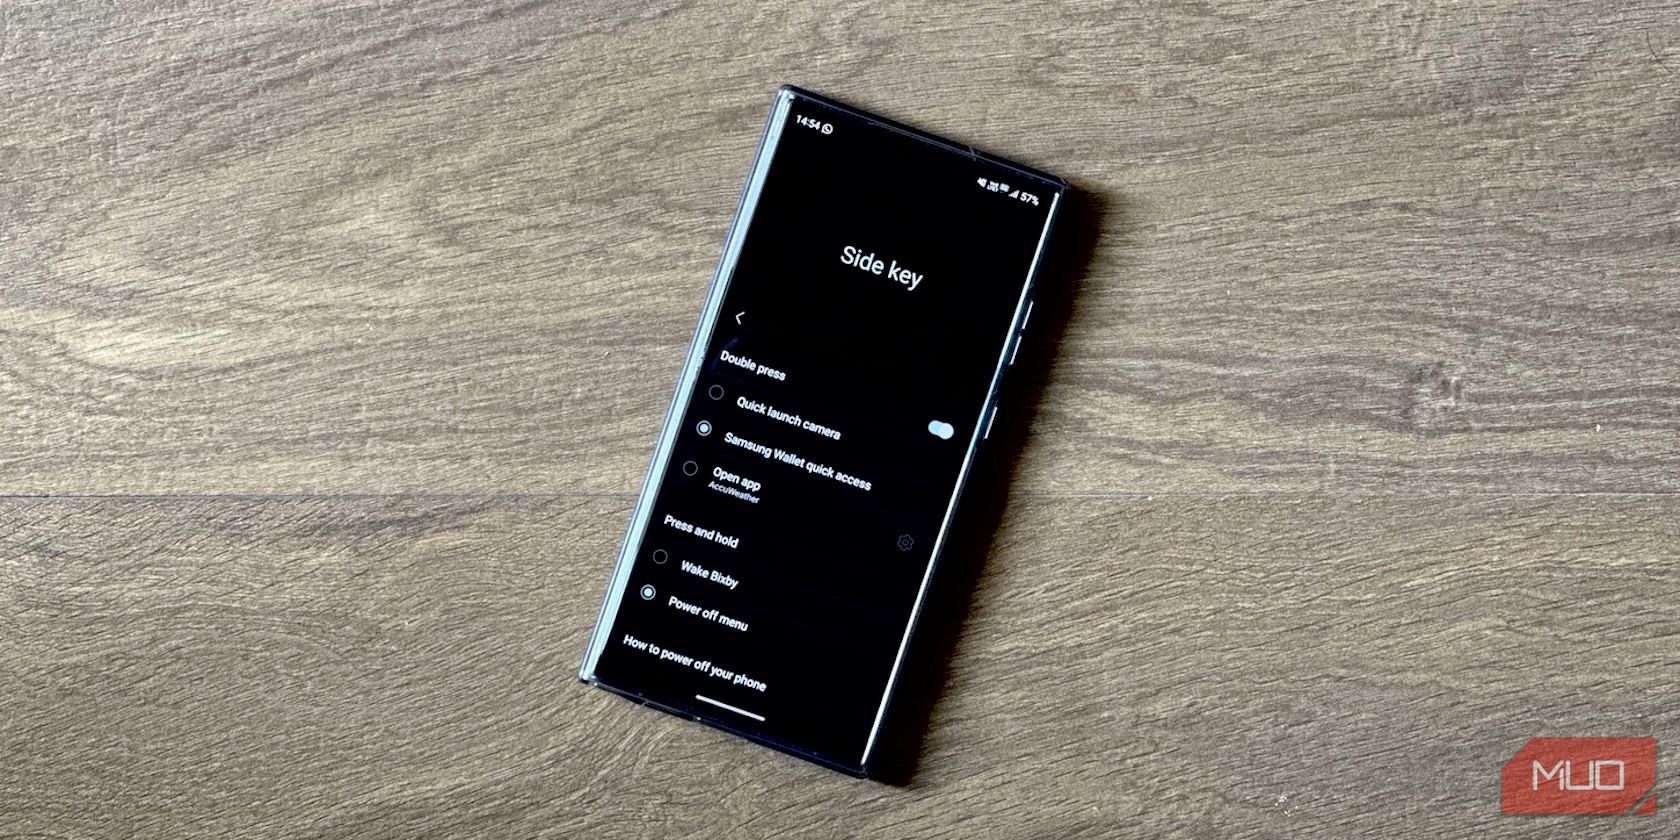 Side key settings on a Samsung phone